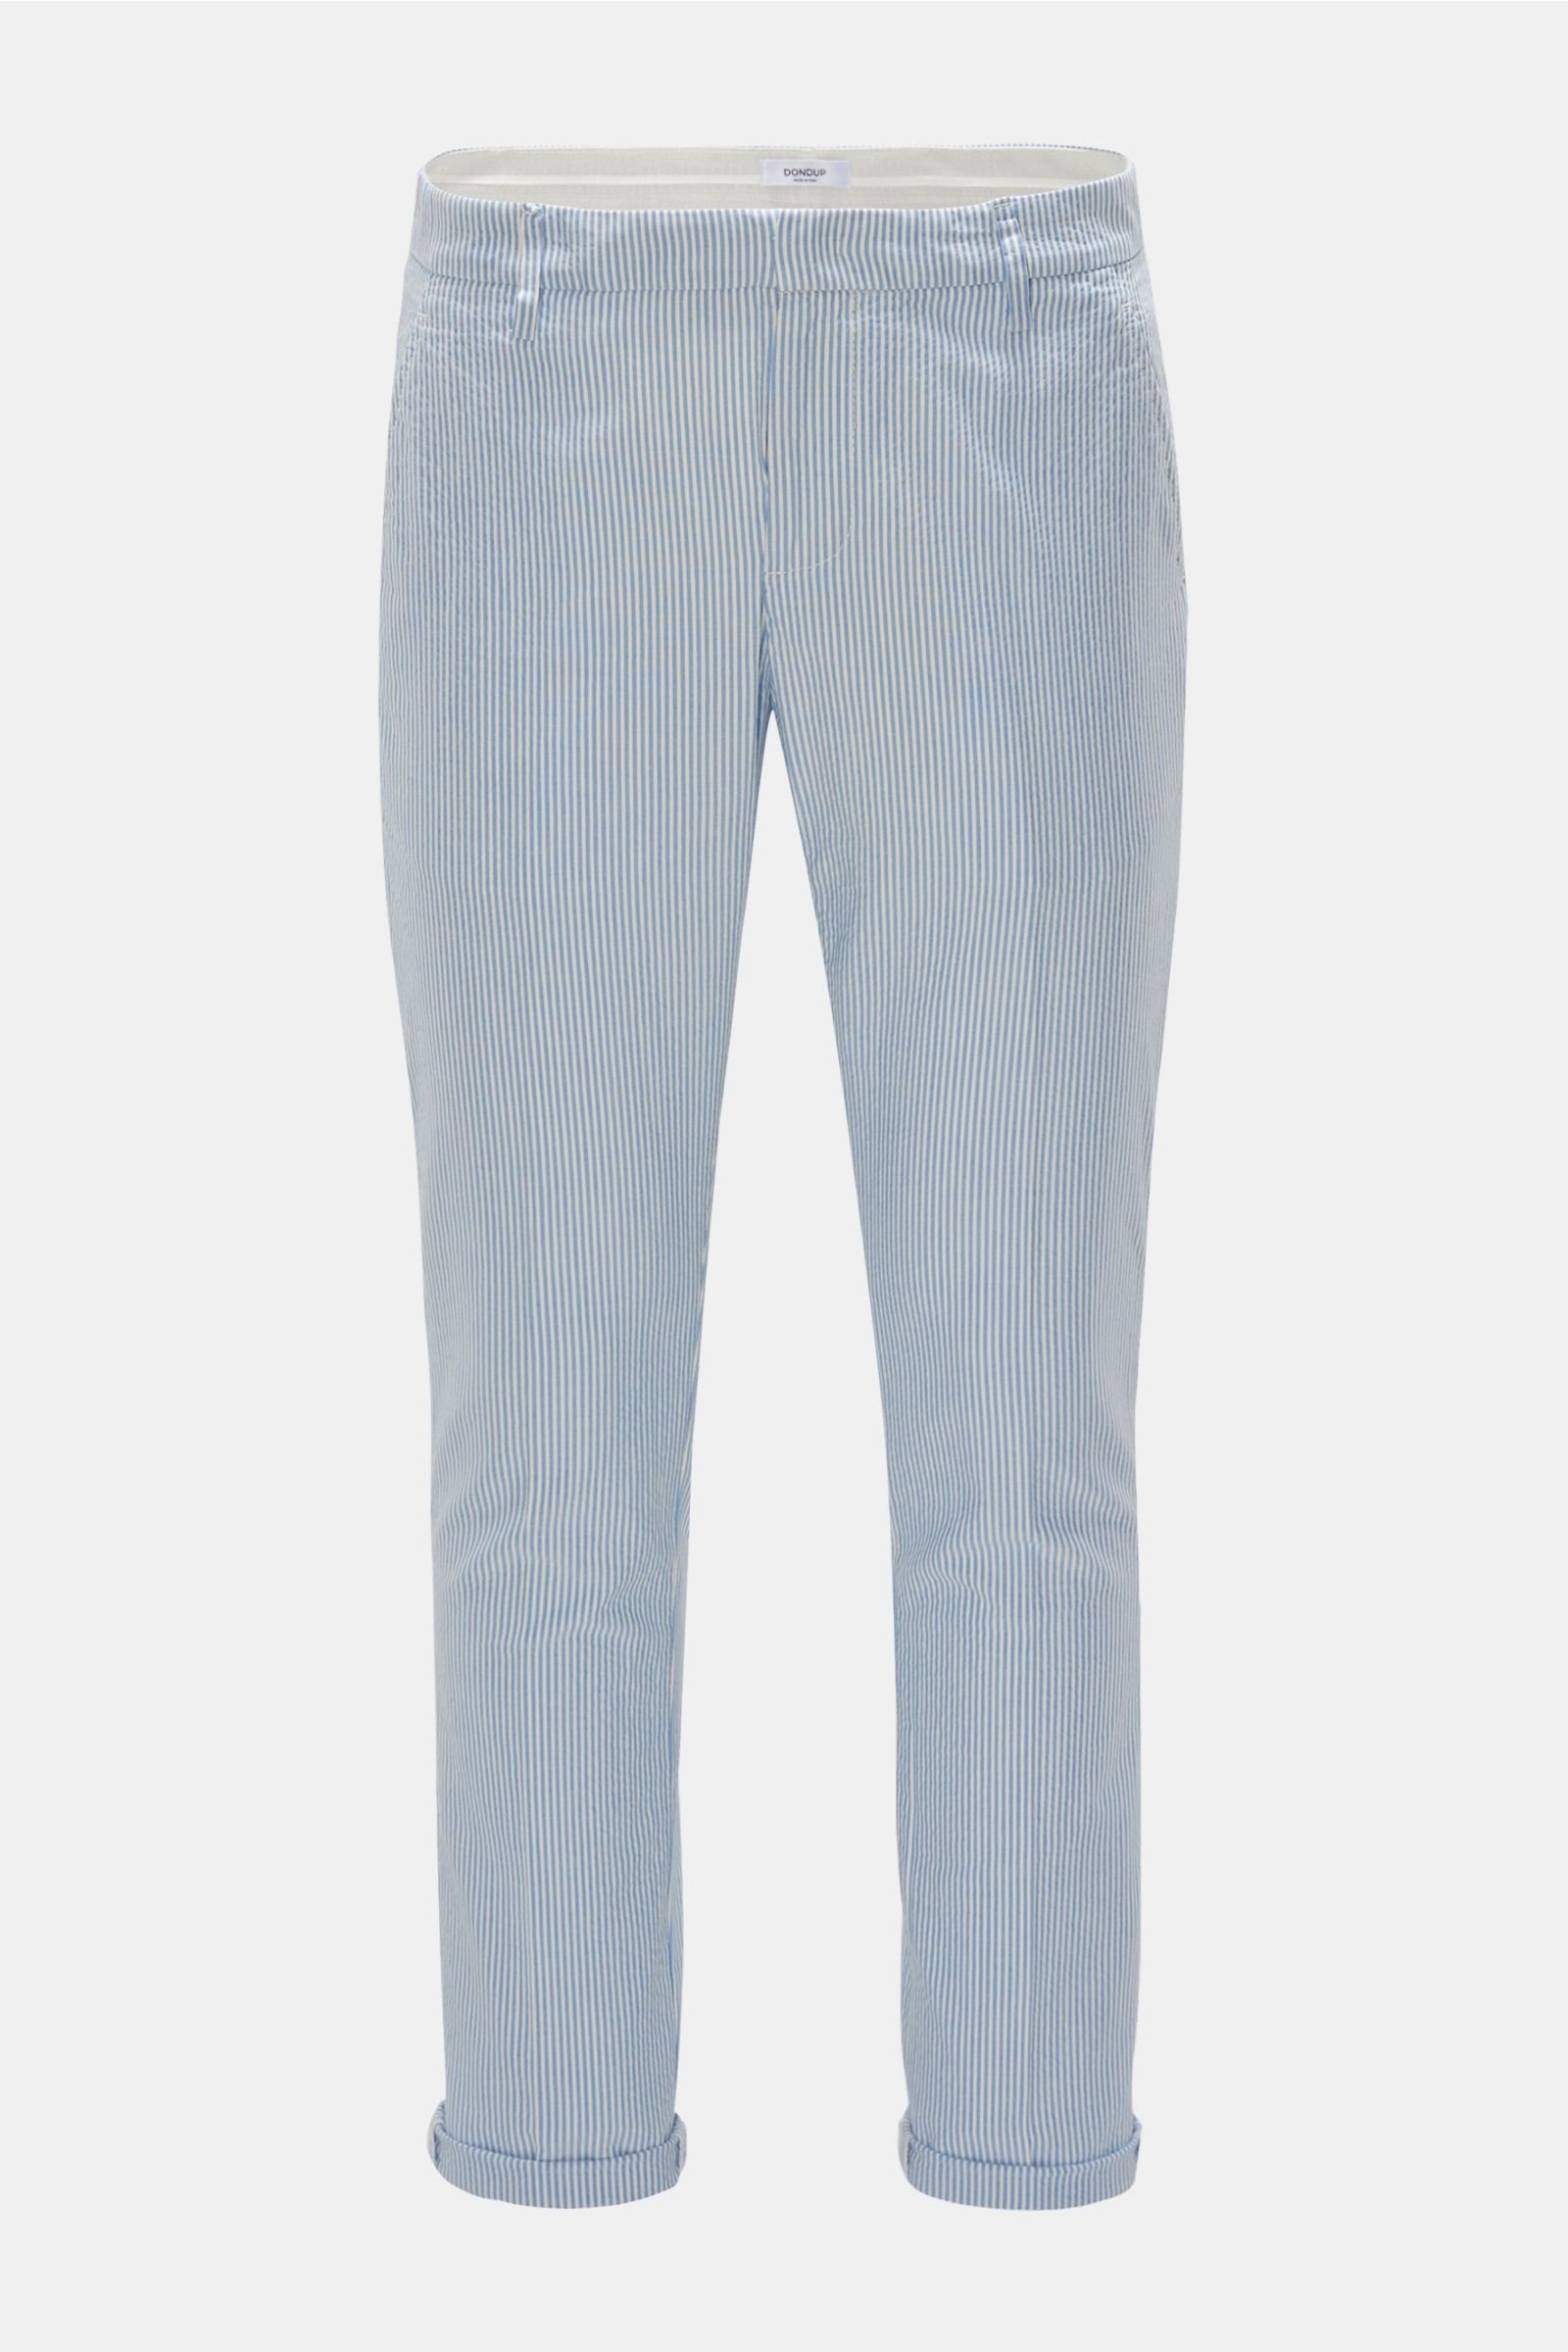 Seersucker trousers 'Gaubert' light blue/white striped